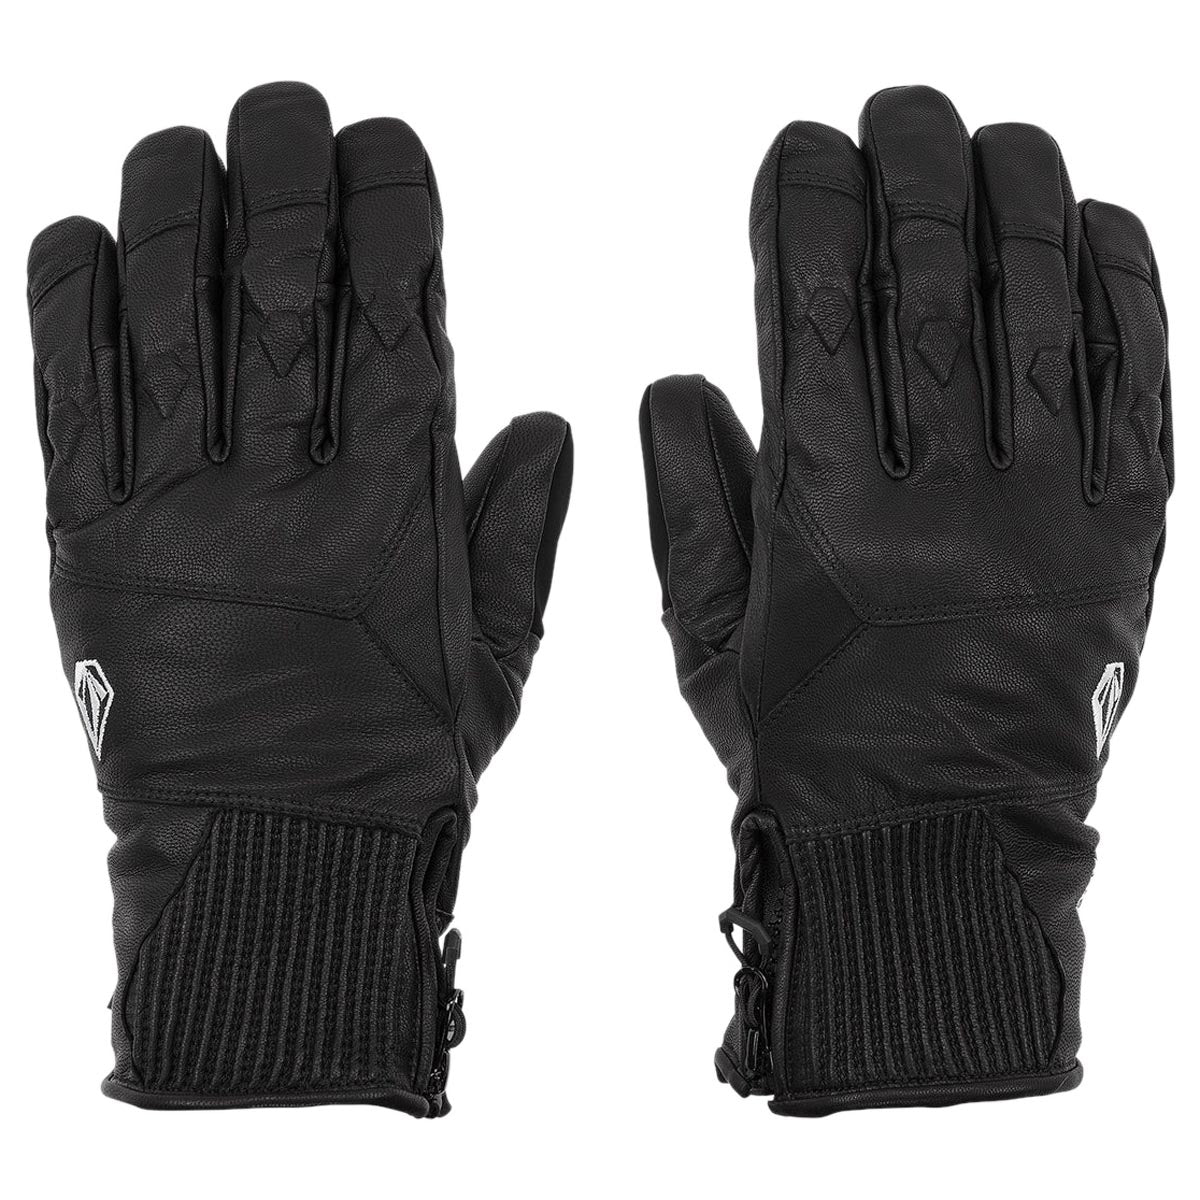 Volcom Service Gore-tex Snowboard Gloves - Black image 1